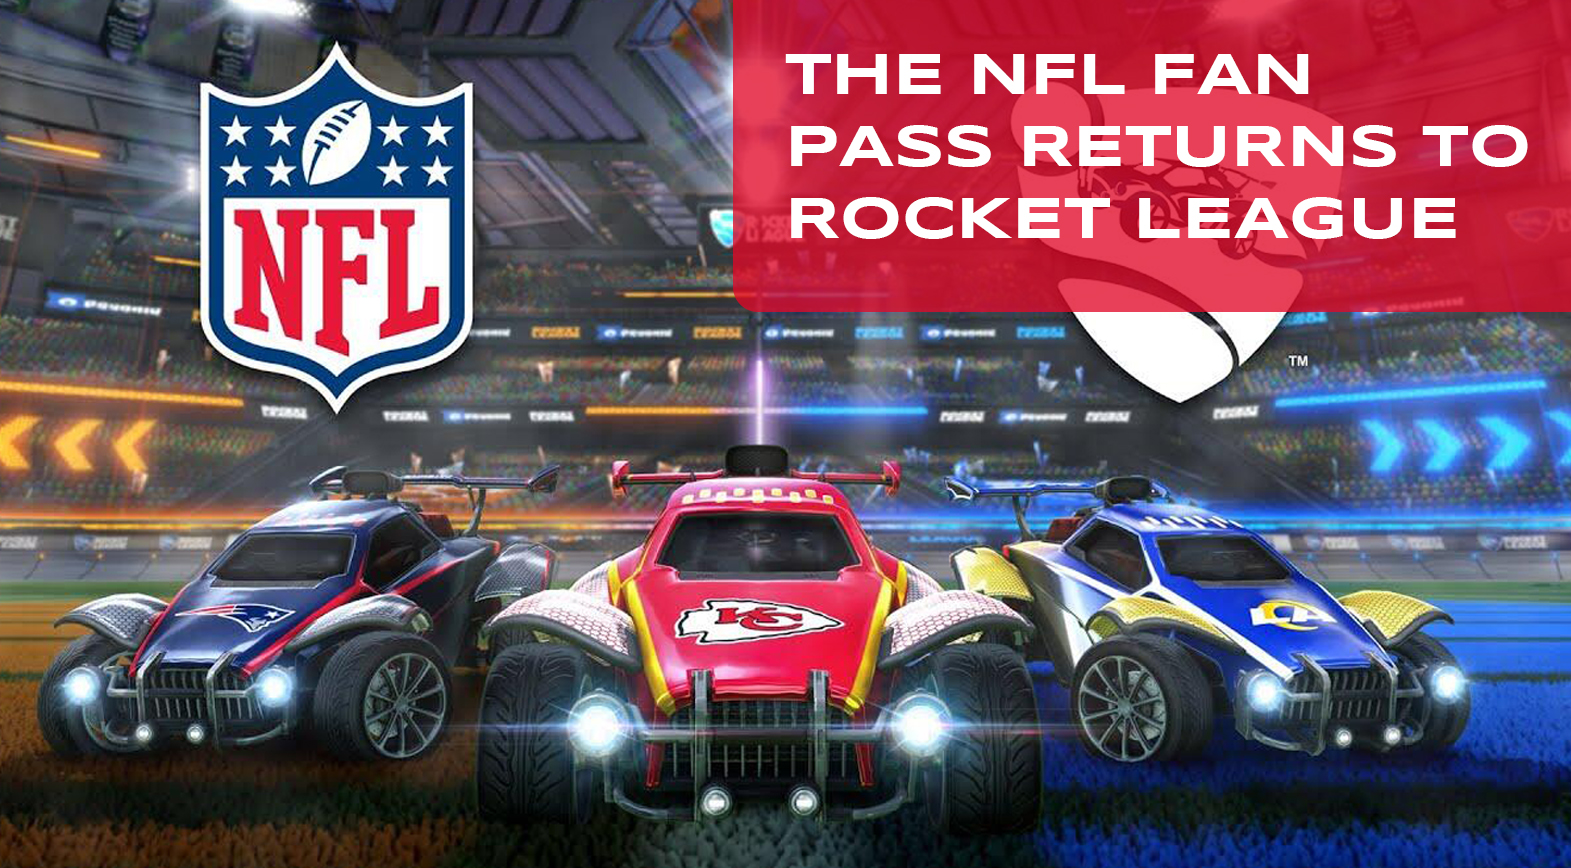 The NFL Fan Pass Returns to Rocket League